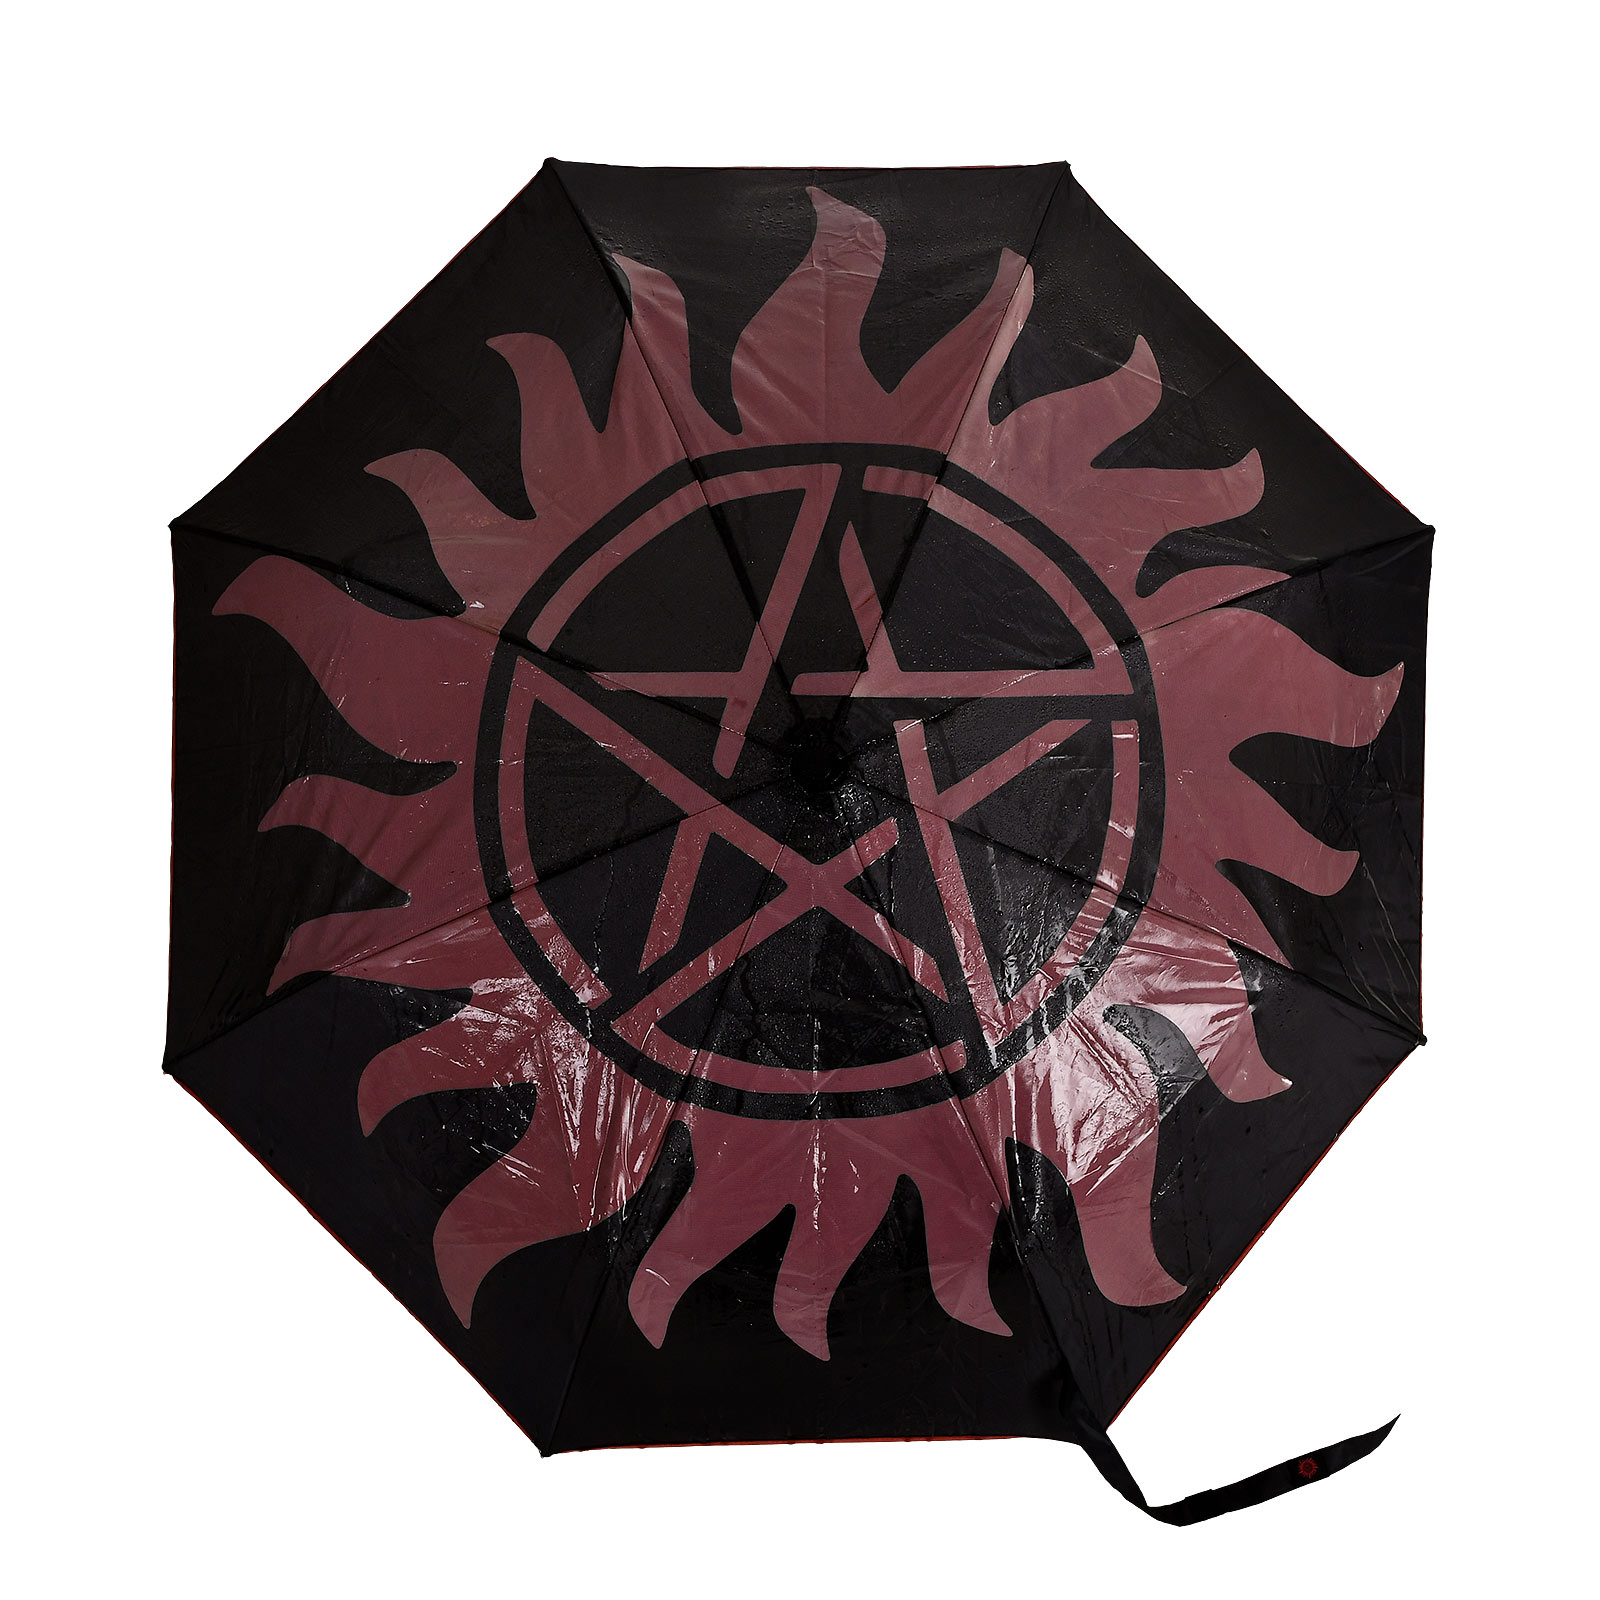 Supernatural - Anti Possession Symbol Schirm mit Aqua Effekt